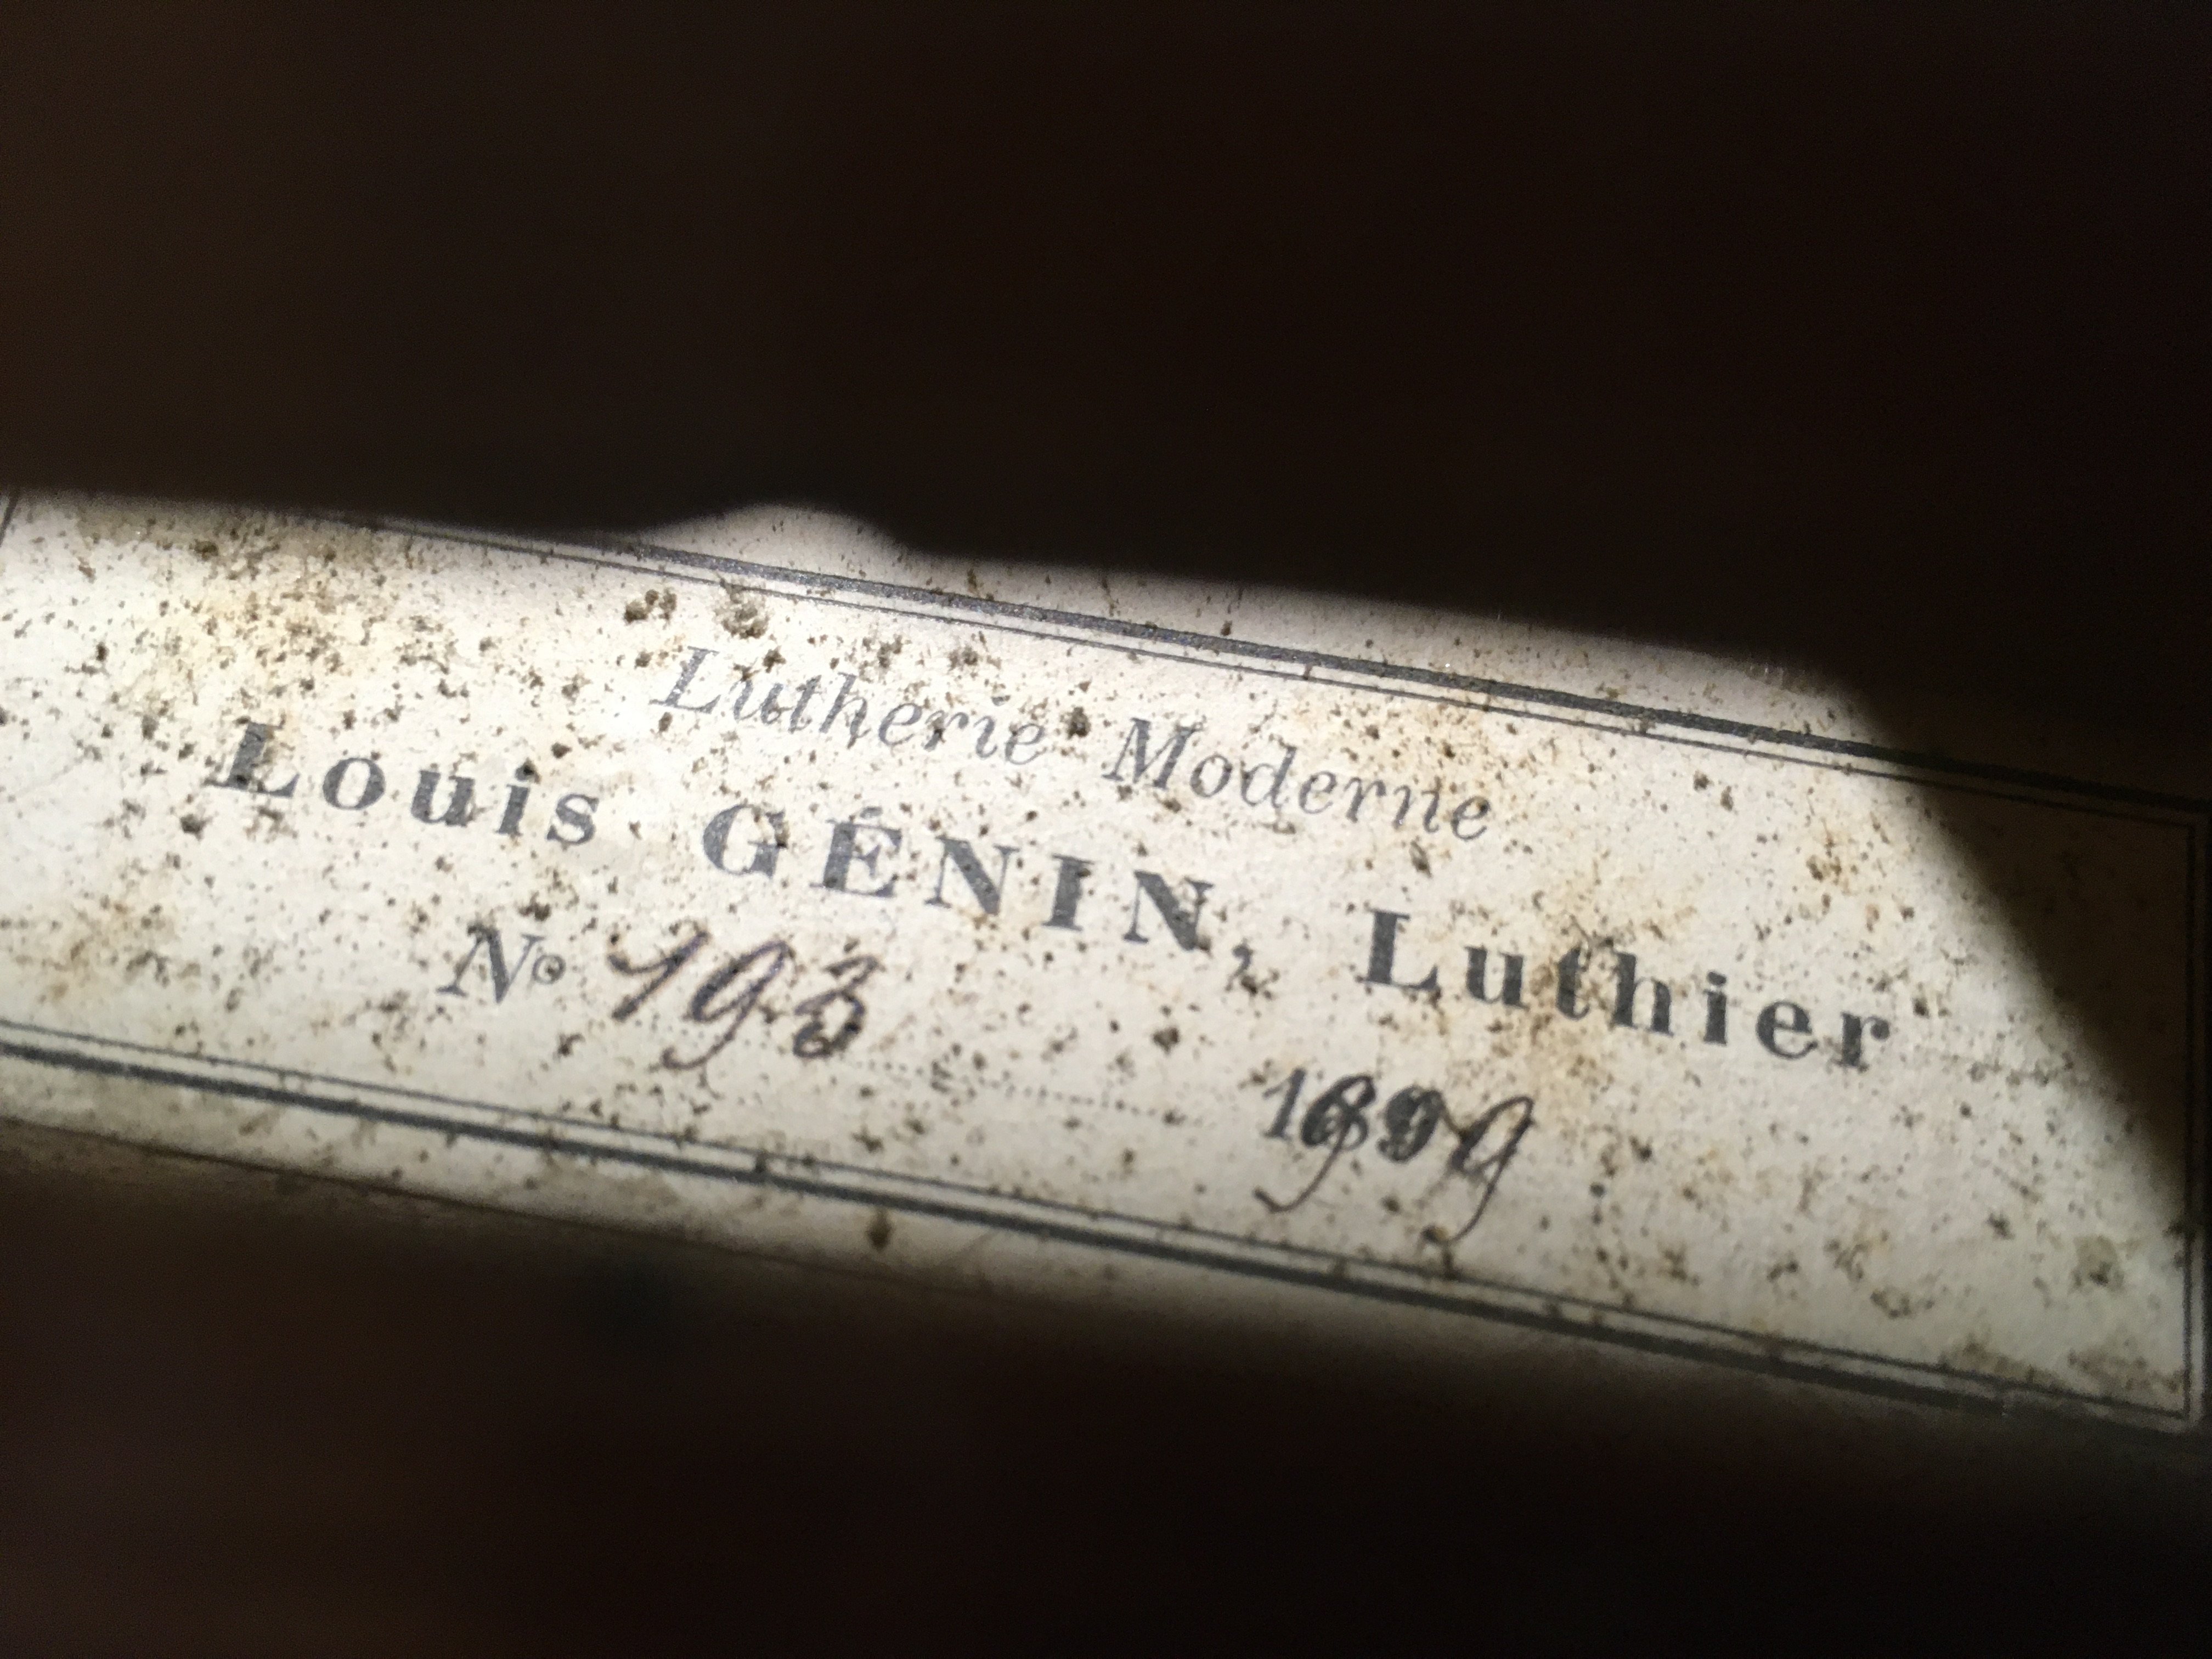 A cased Louis Genin 1909 Violin, no 193. Approxima - Image 6 of 12